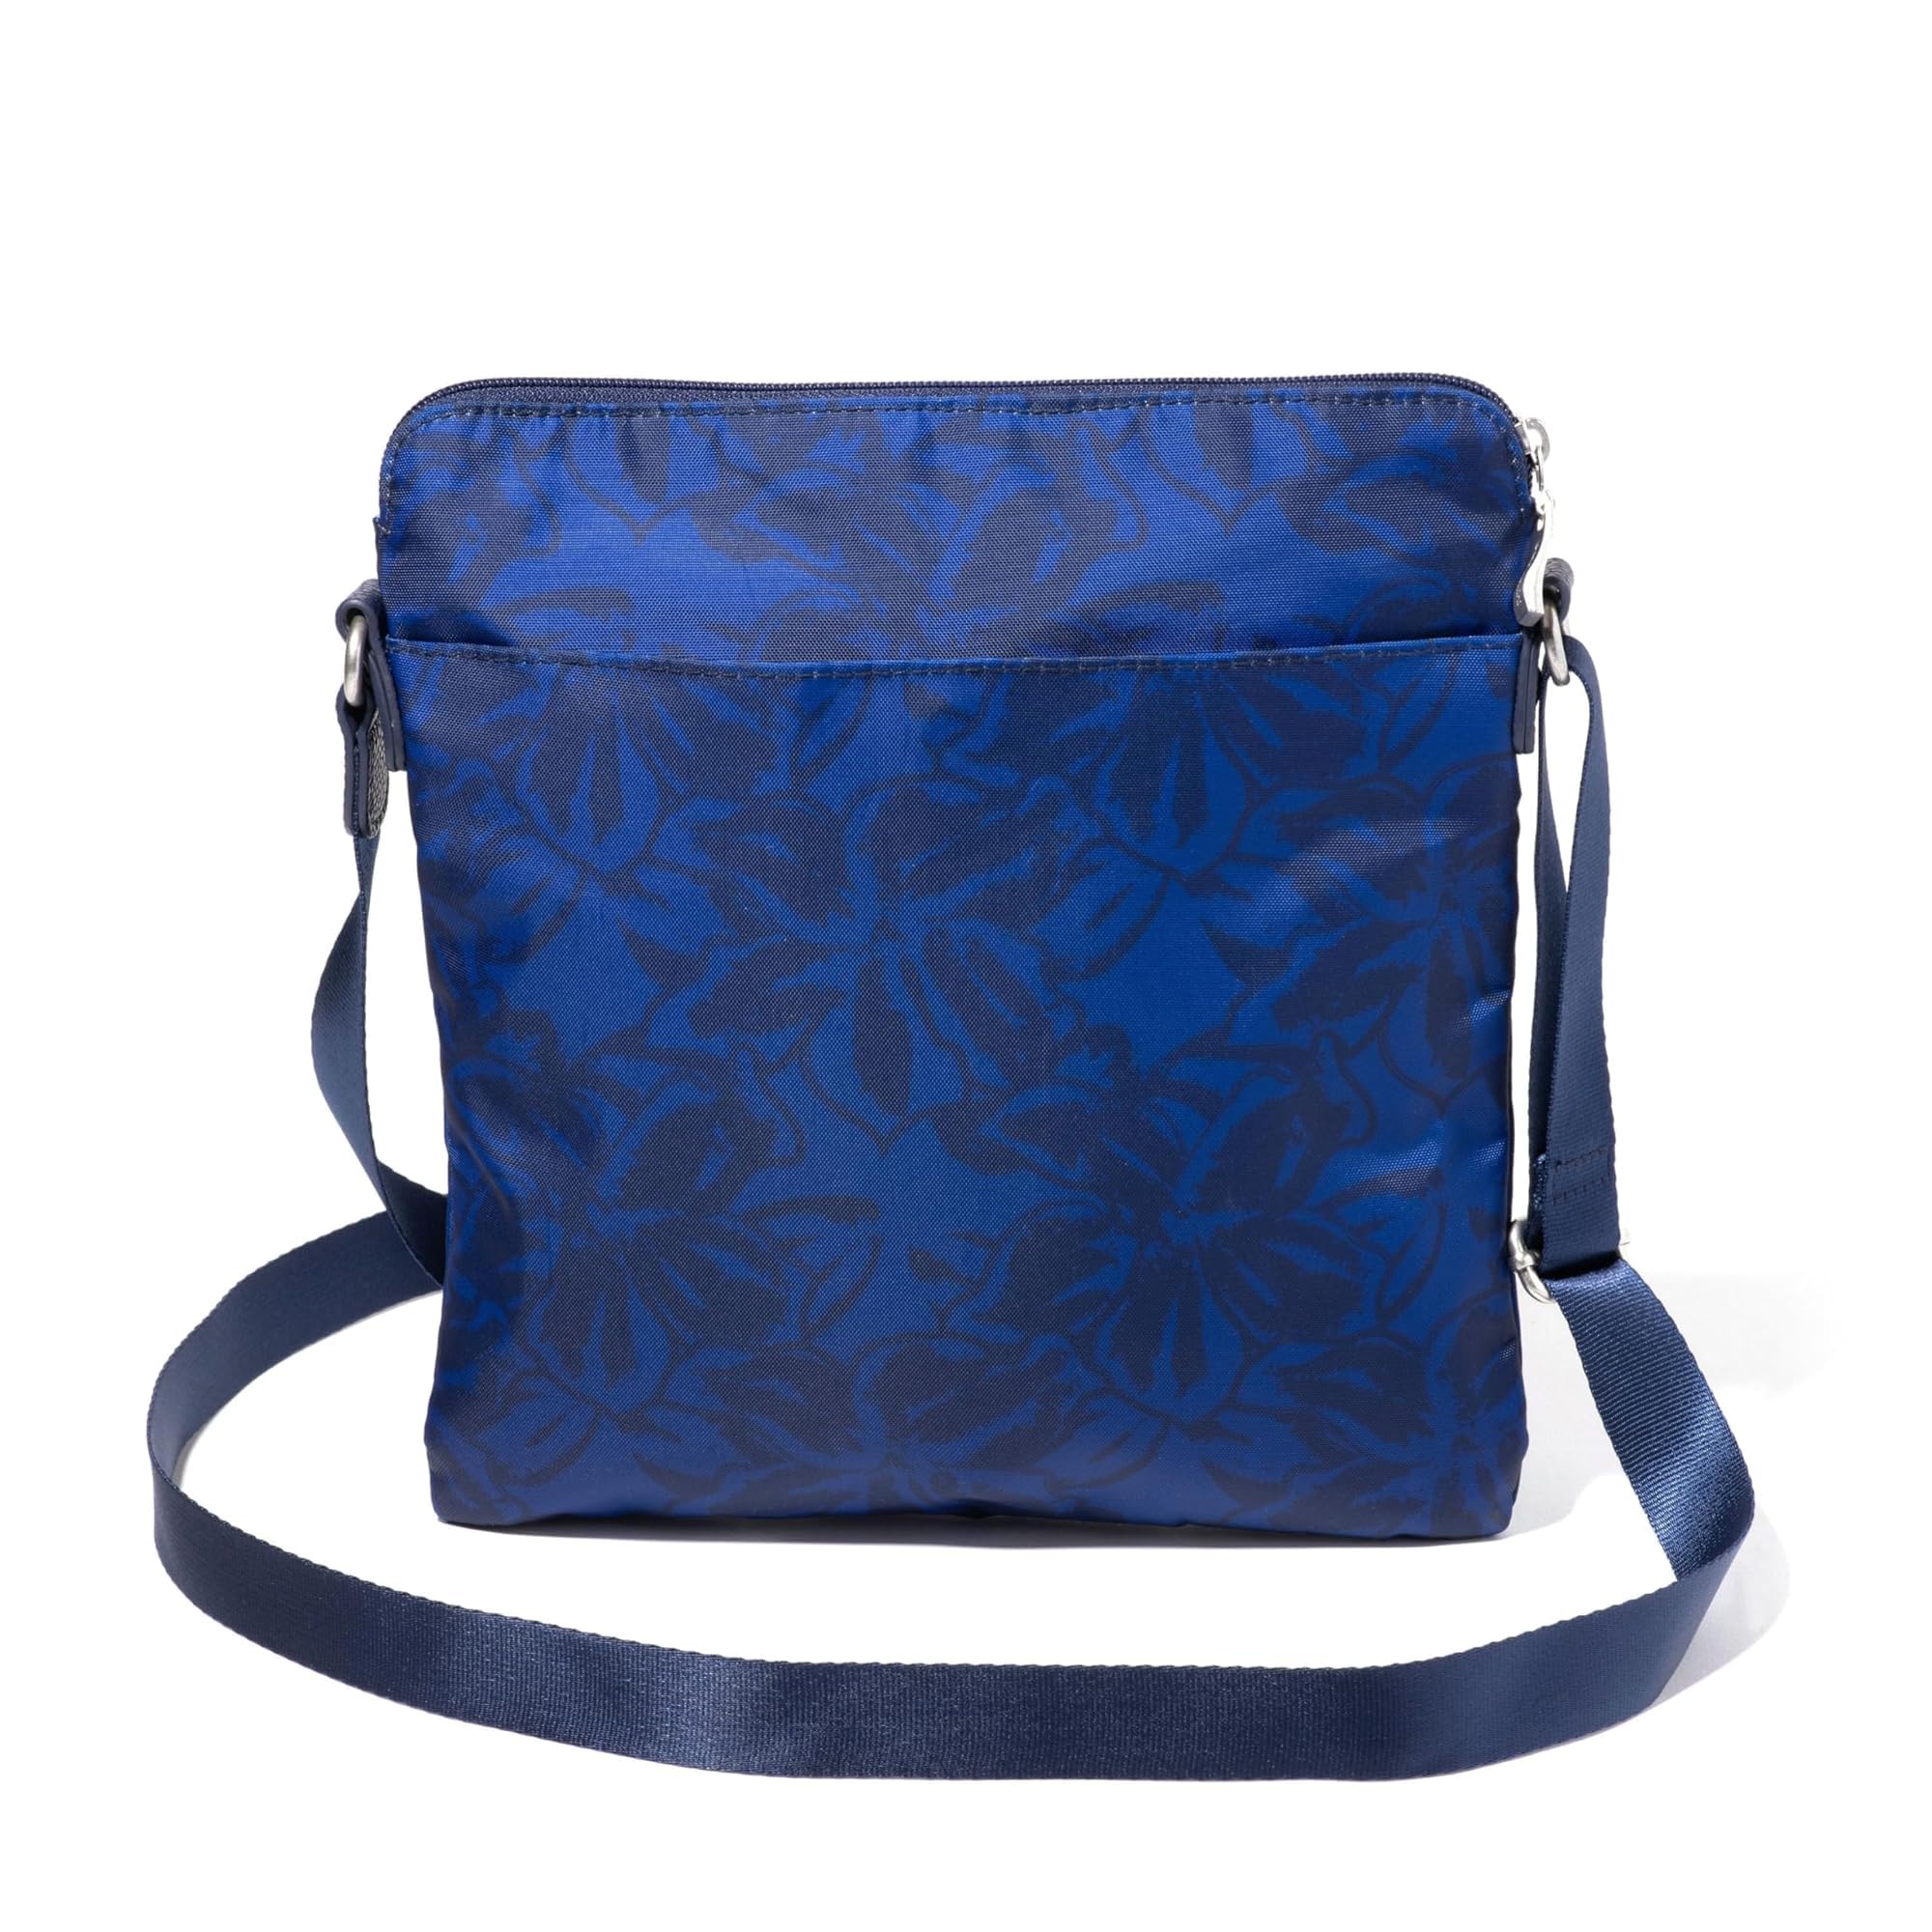 Baggallini Go Bagg With Rfid Wristlet - Travel Crossbody Bag for Women - Lightweight Water-Resistant Handbags